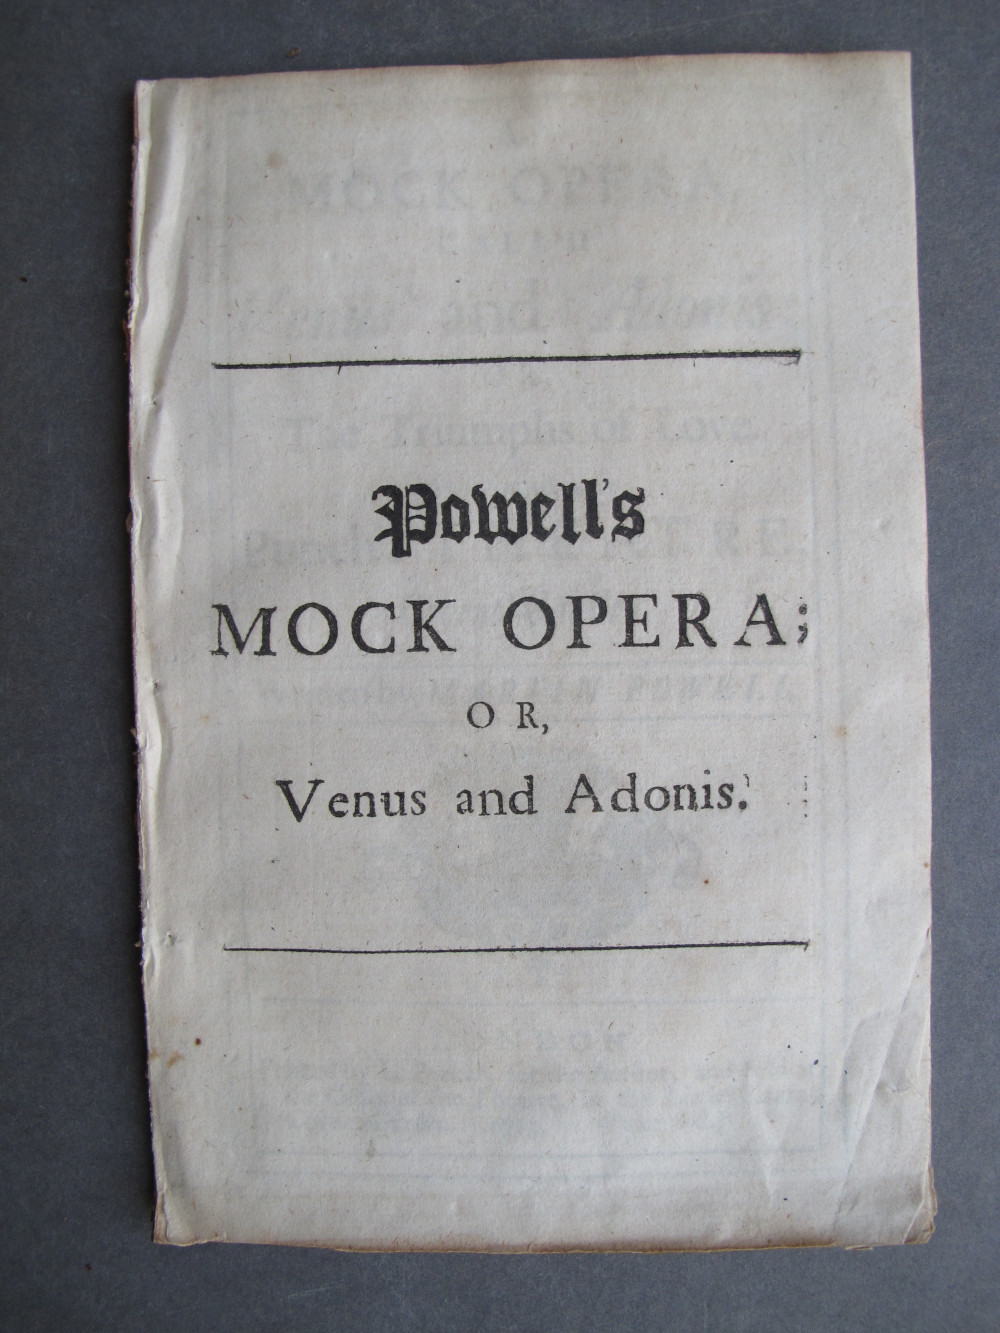 Folio A1 recto, text: 
Powells
MOCK OPERA;
OR,
Venus and Adonis.

